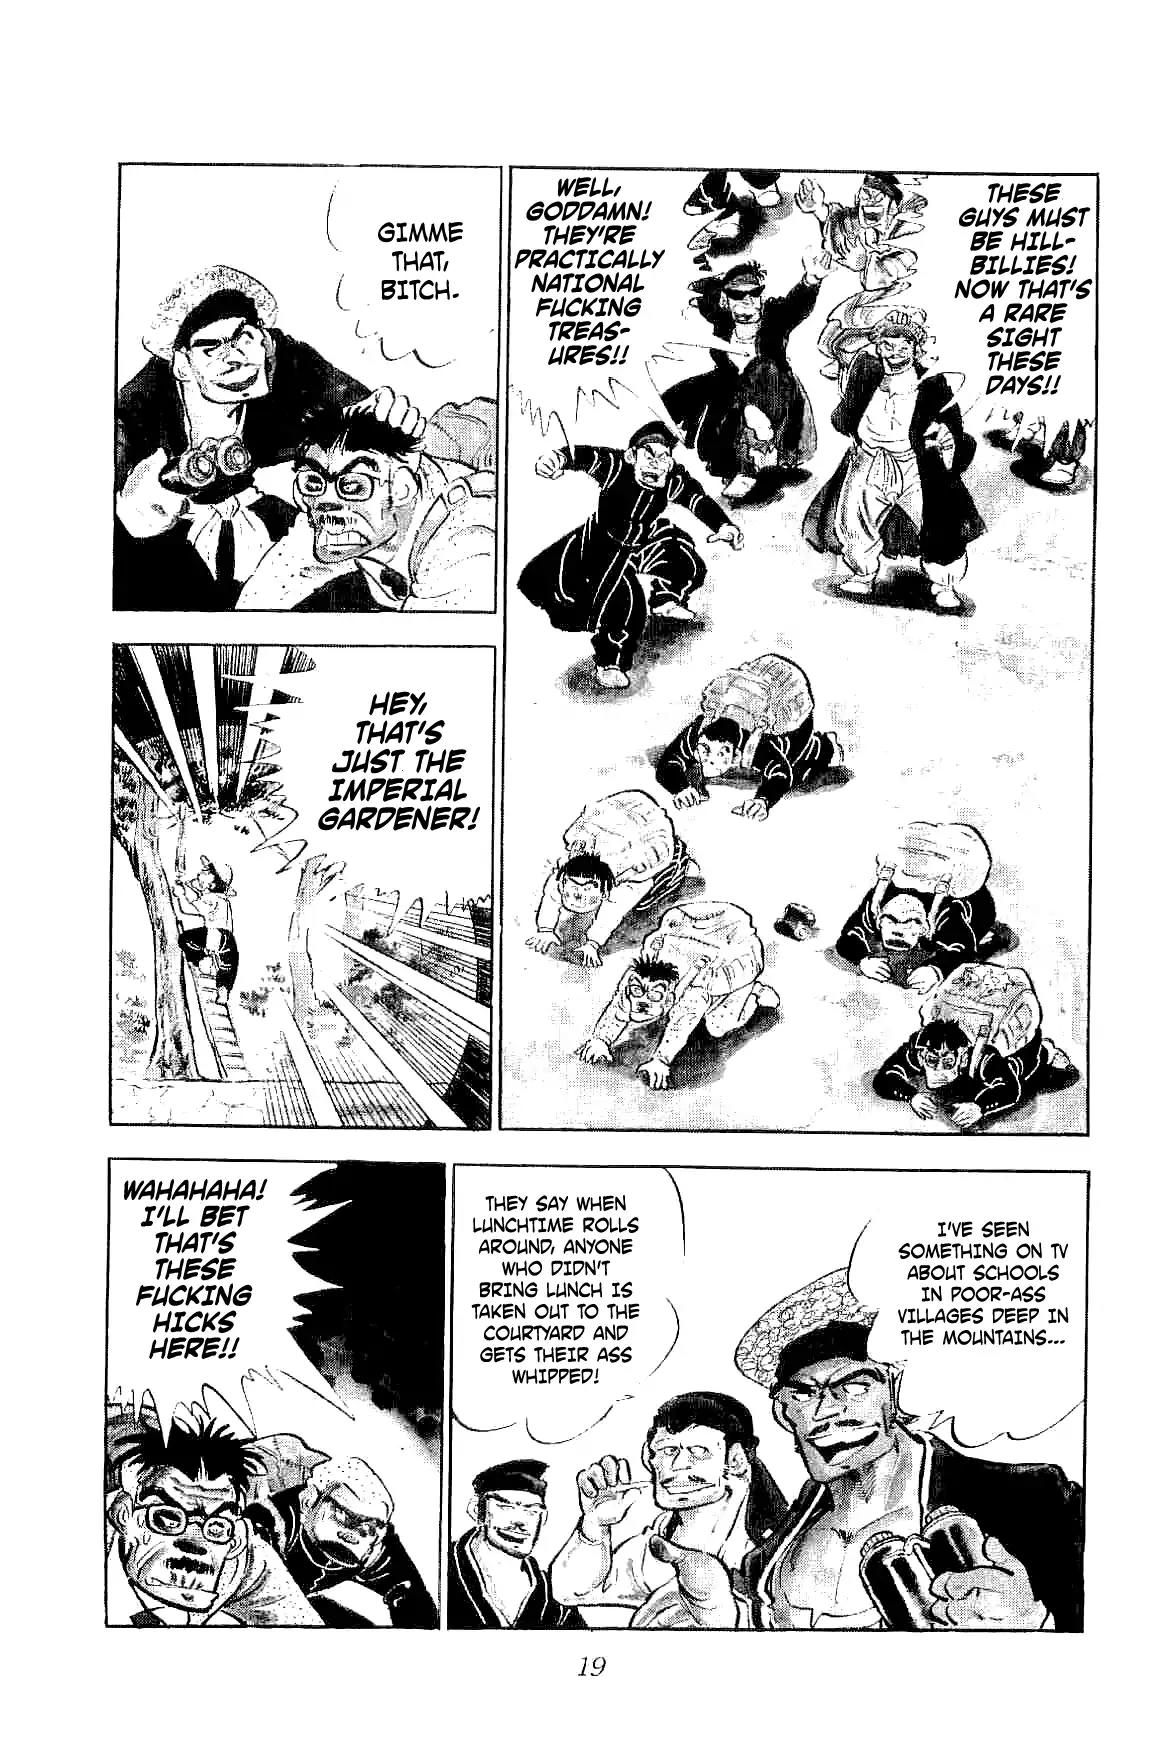 Rage!! The Gokutora Family Vol.1 Chapter 1: